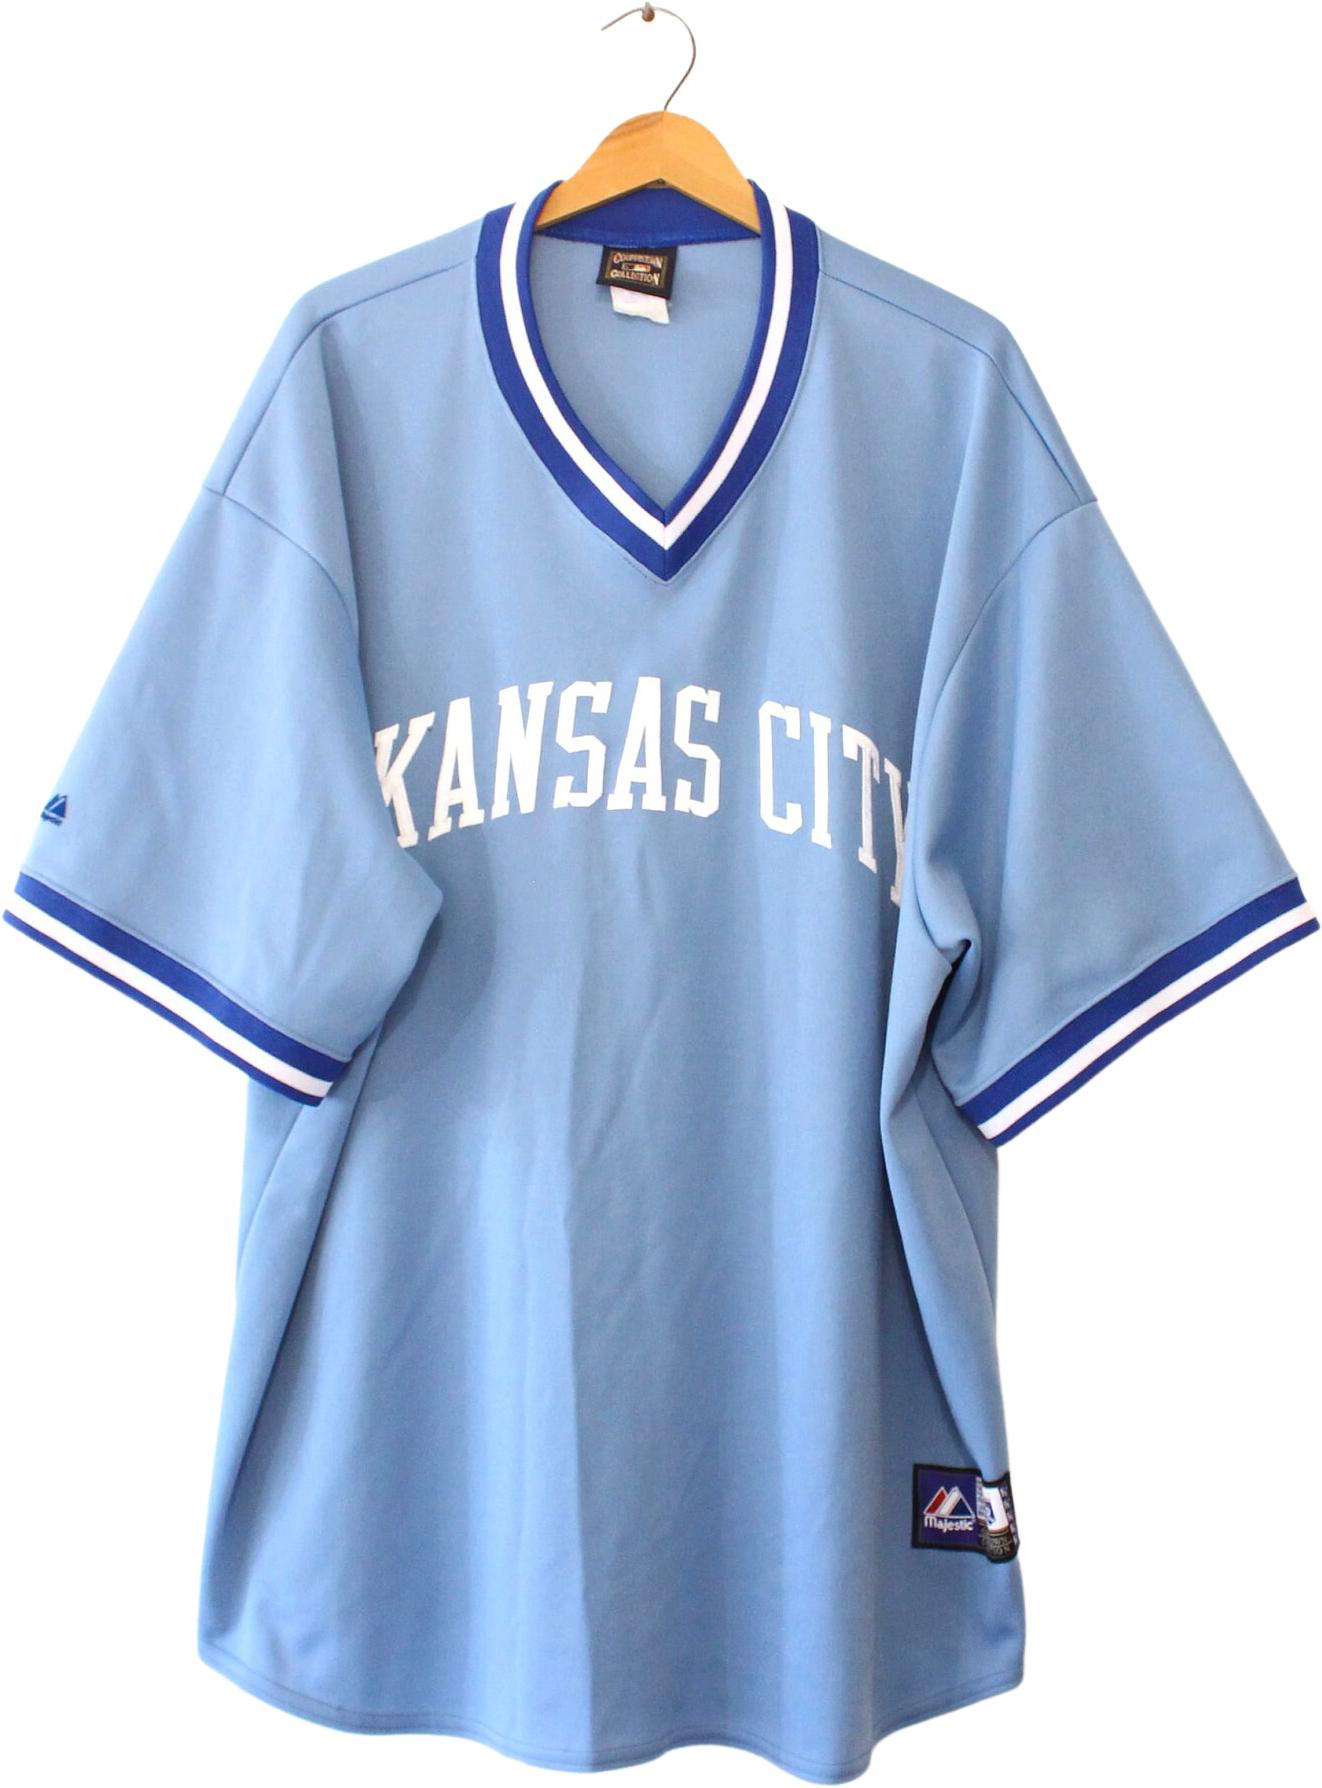 MLB Kansas City Royals Men's Cooperstown Baseball Jersey.